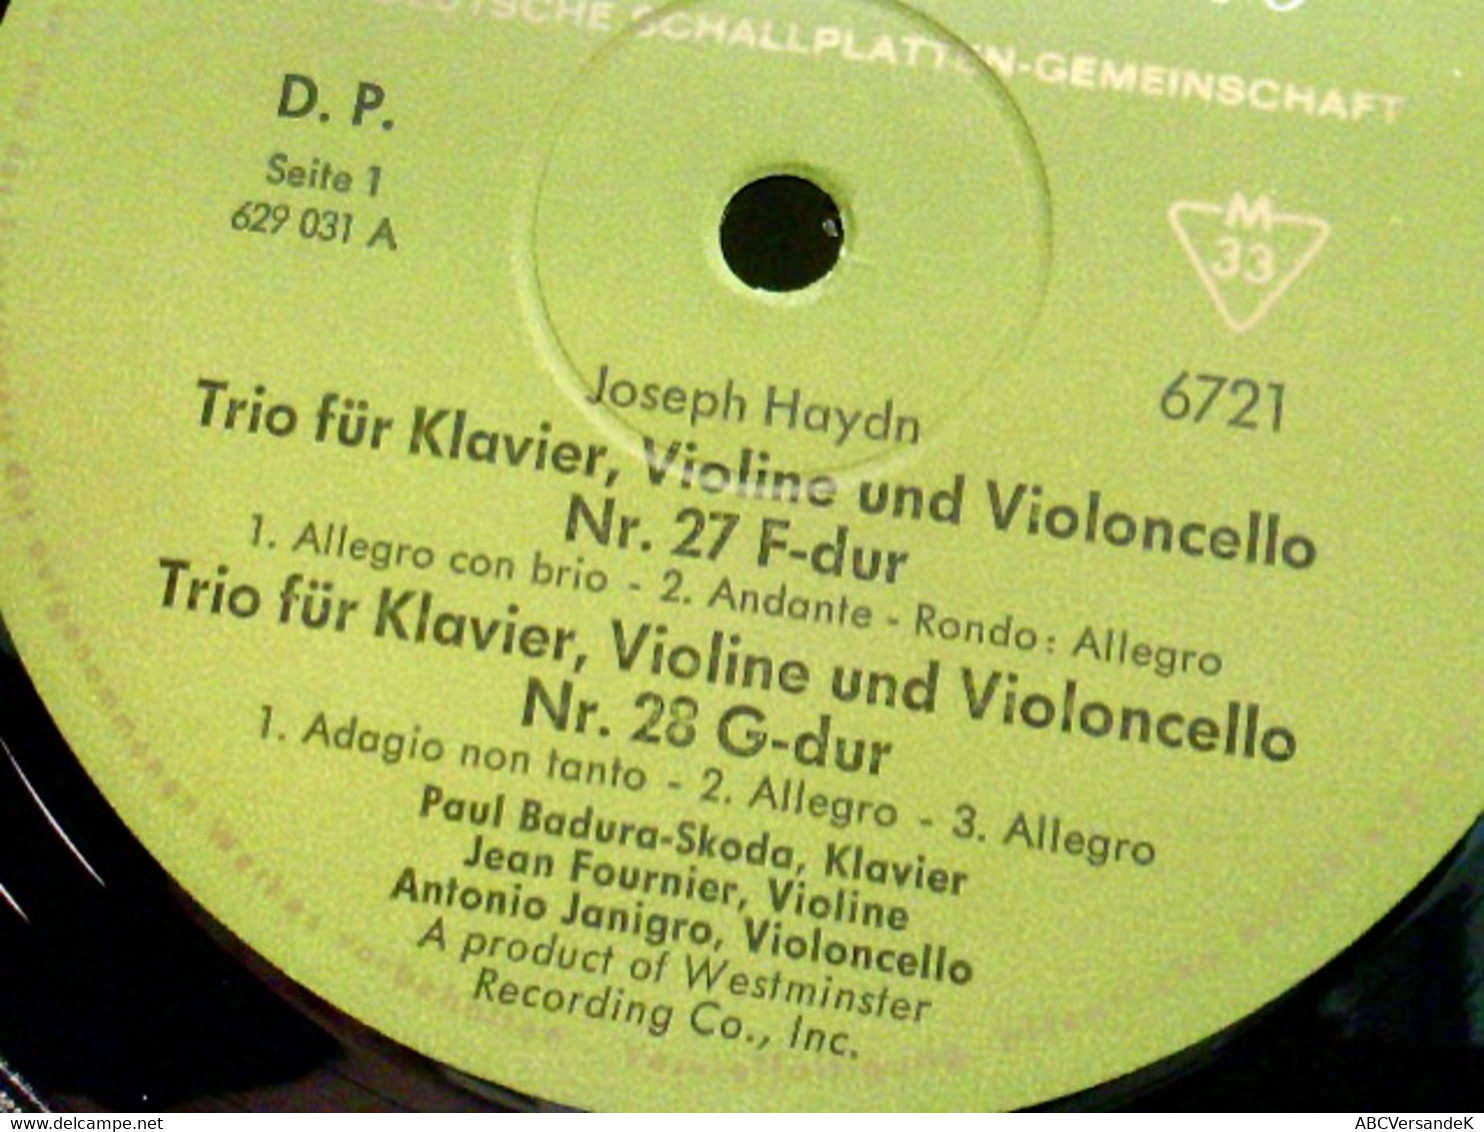 Joseph Haydn - Jean Fournier, Antonio Janigro, Paul Badura-Skoda  Klaviertrio Nr. 27 - 30 - Trios Für Klavier - Sports